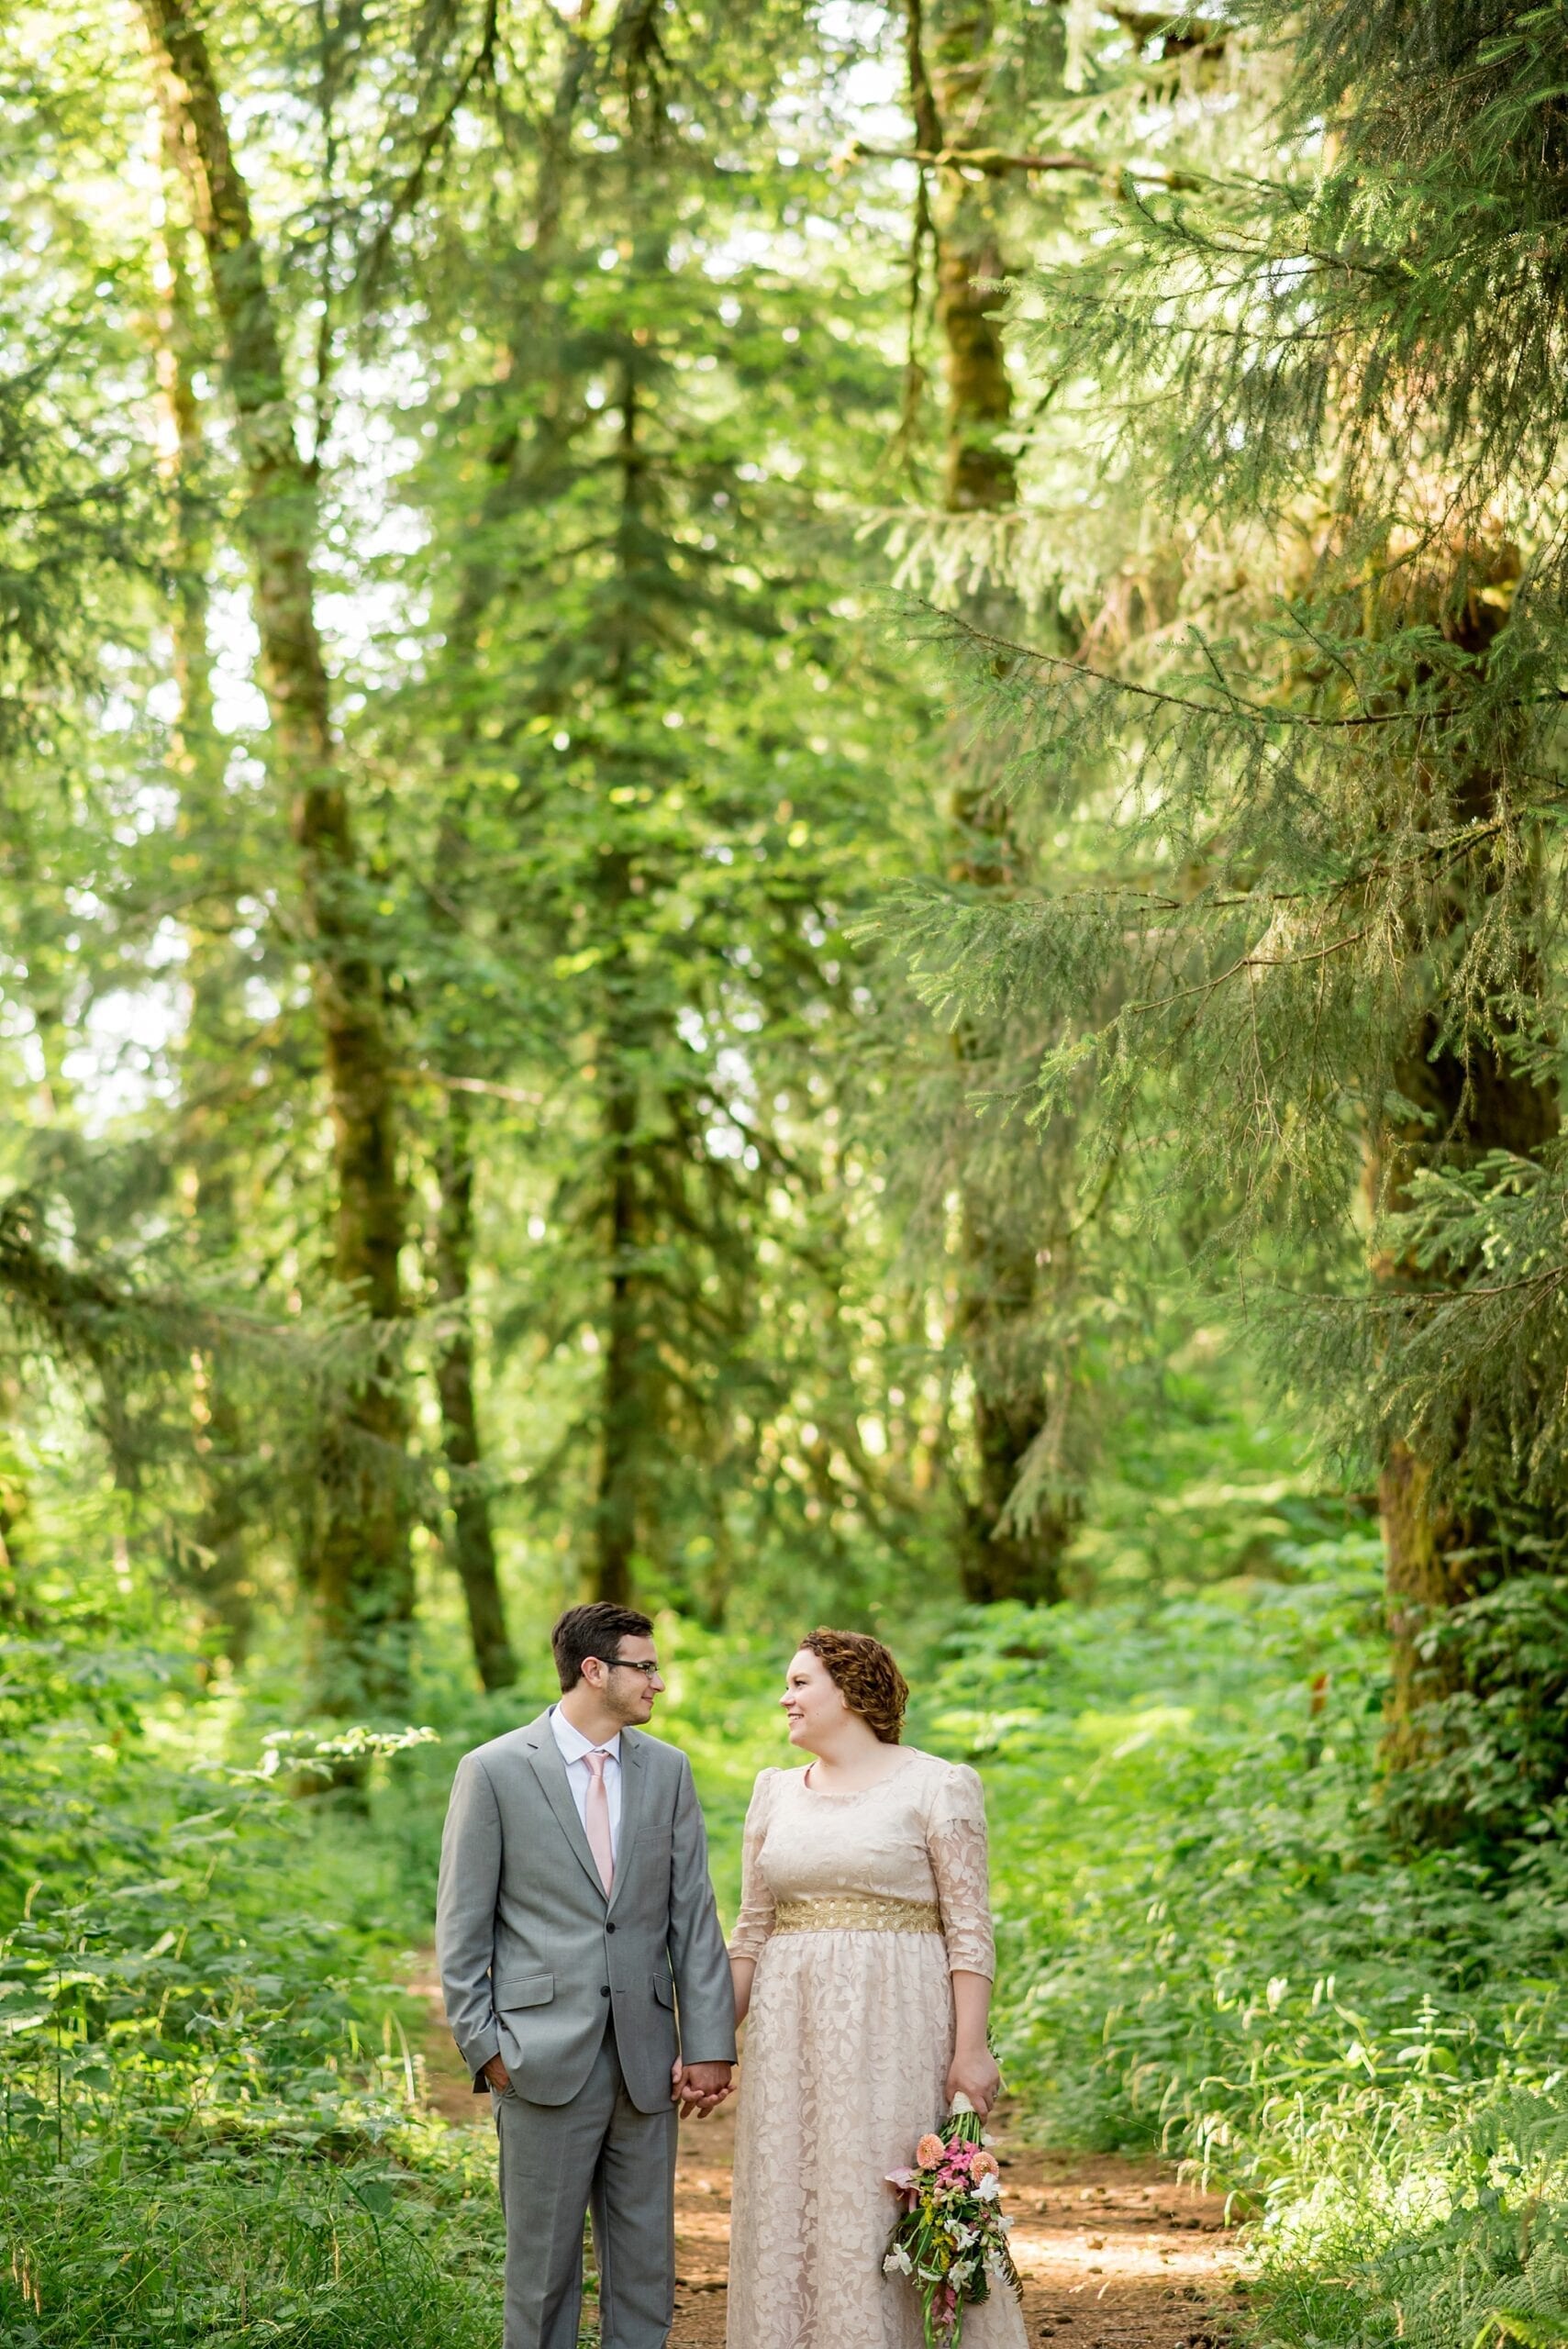 Oregon Coast bridal session by Michelle & Logan Photo+Films